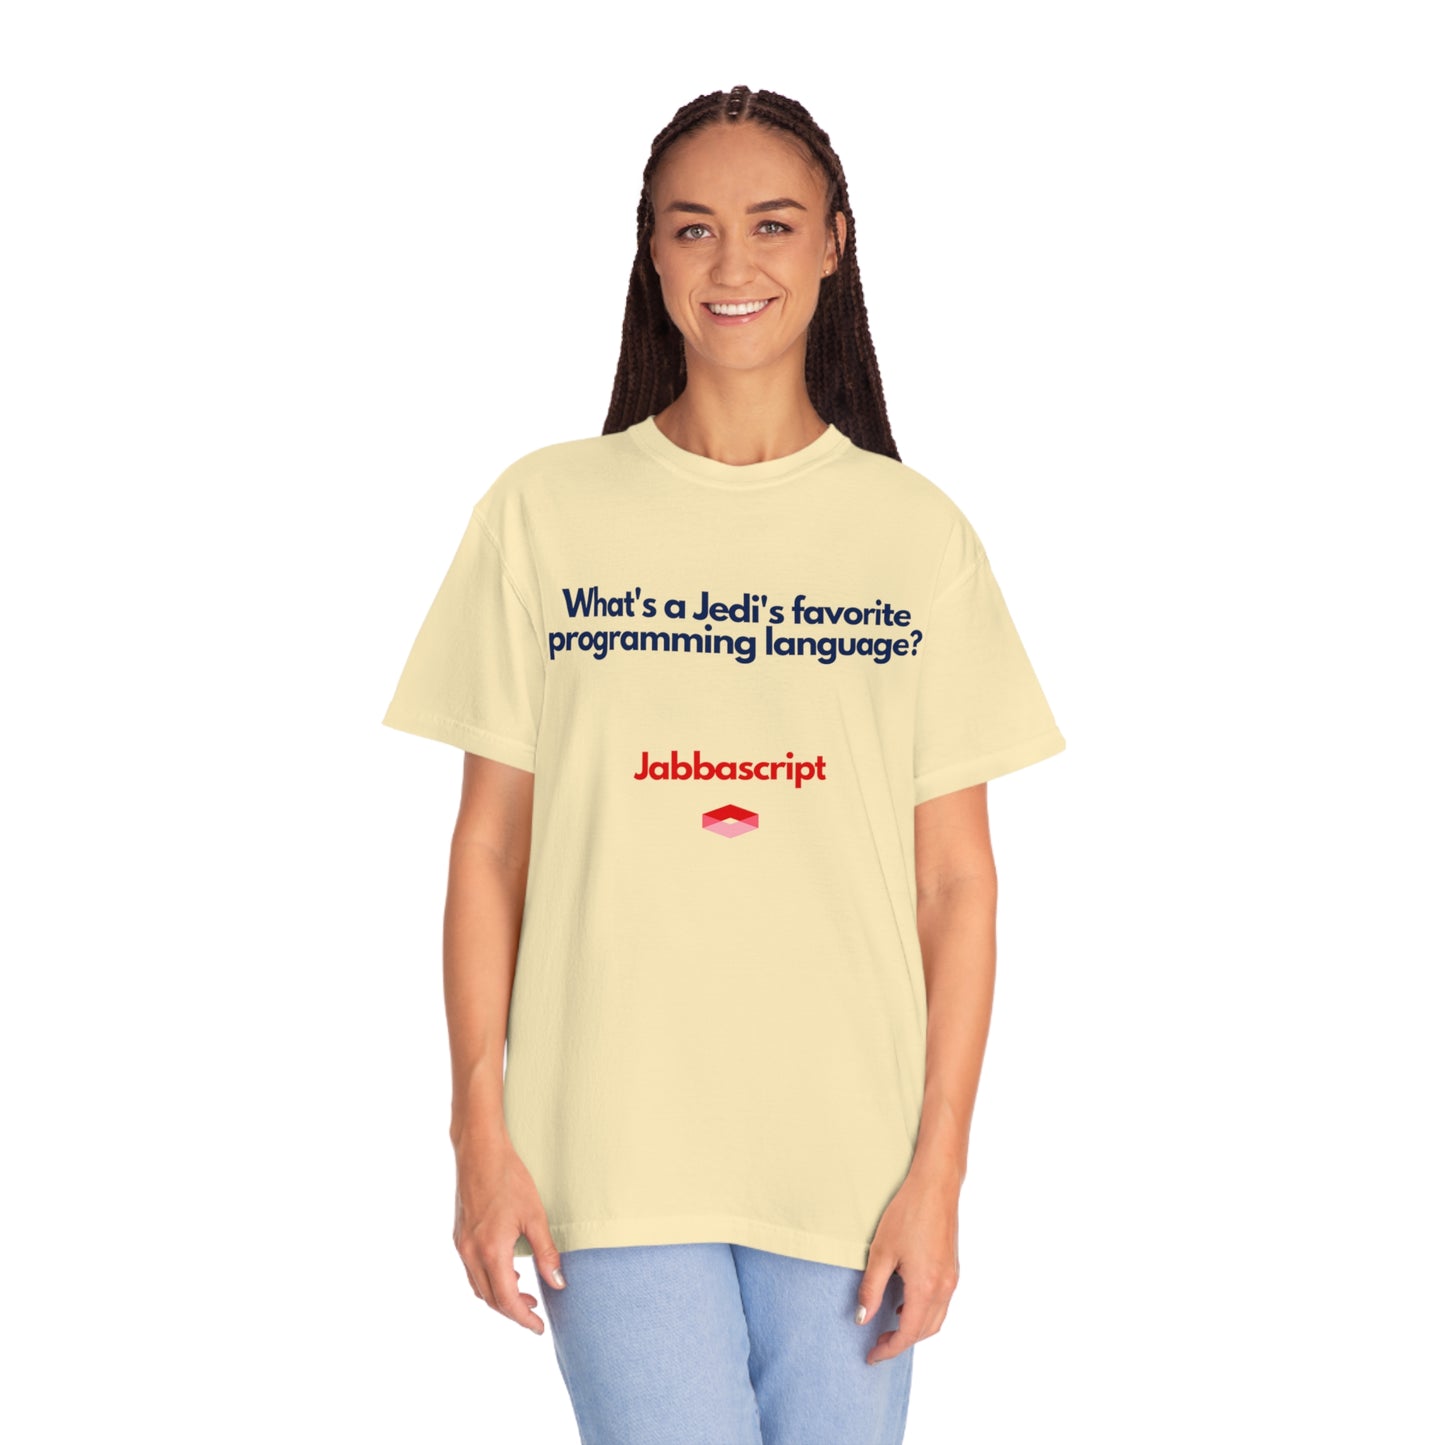 Adult Jabbascript Garment-Dyed T-shirt